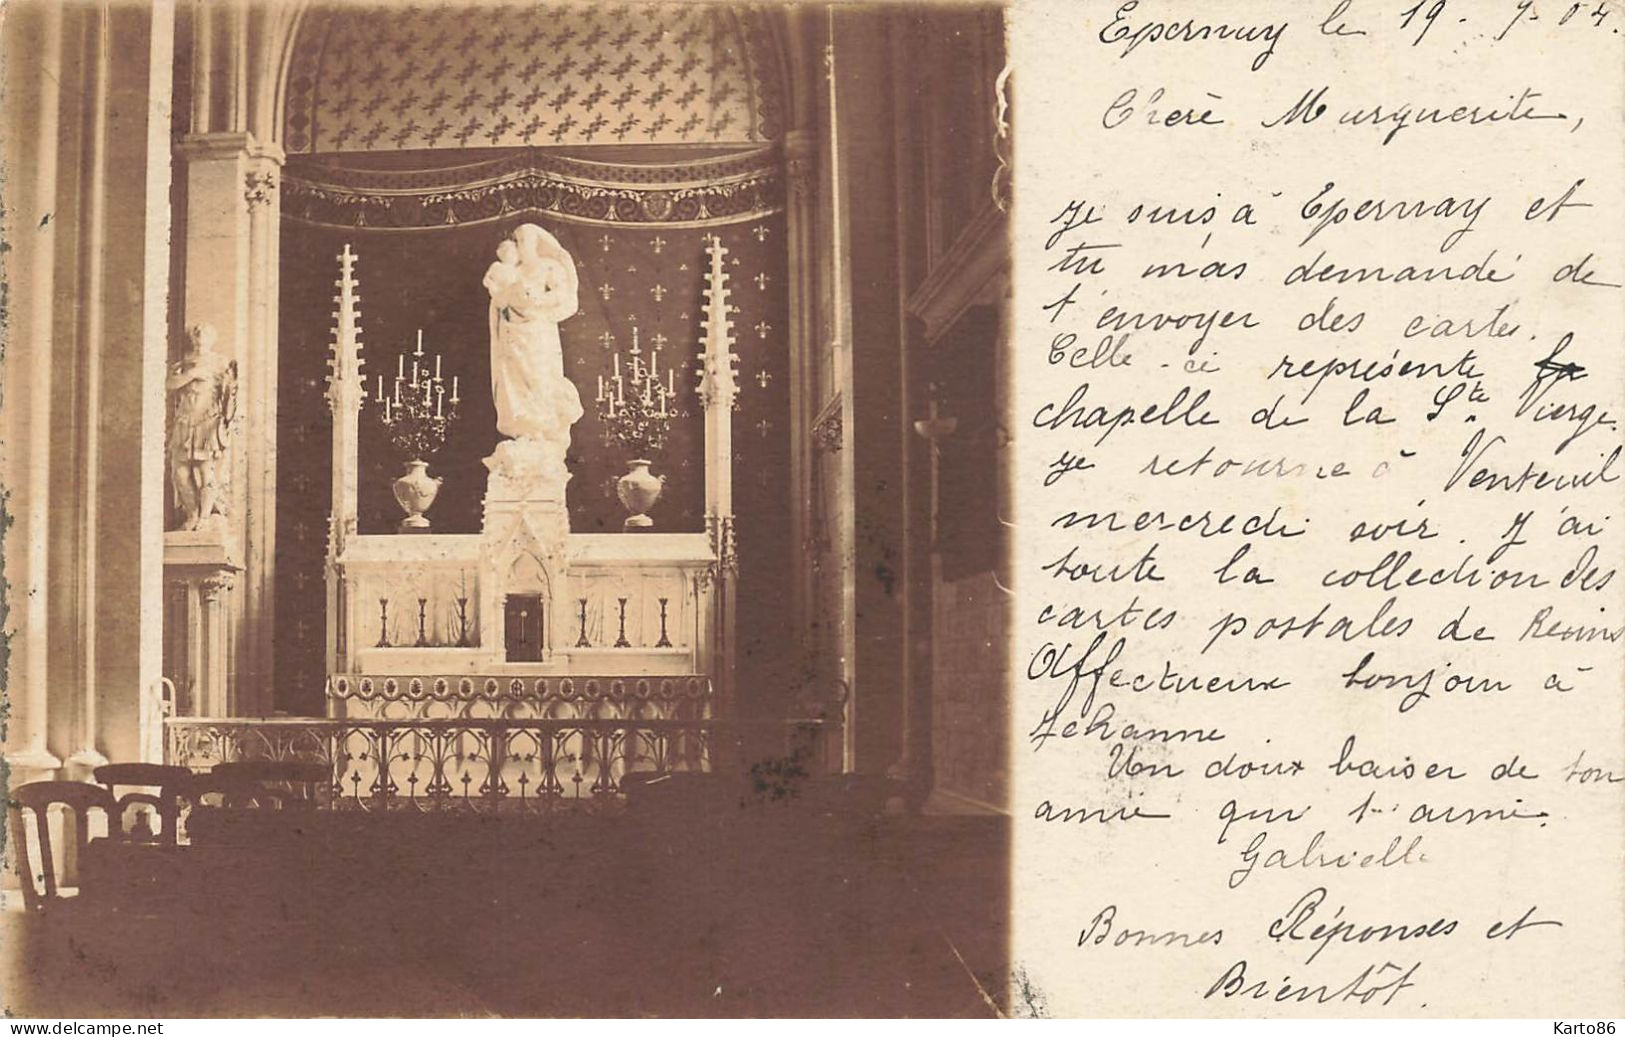 épernay * Carte Photo * La Chapelle De La Sainte Vierge * 1904 - Epernay